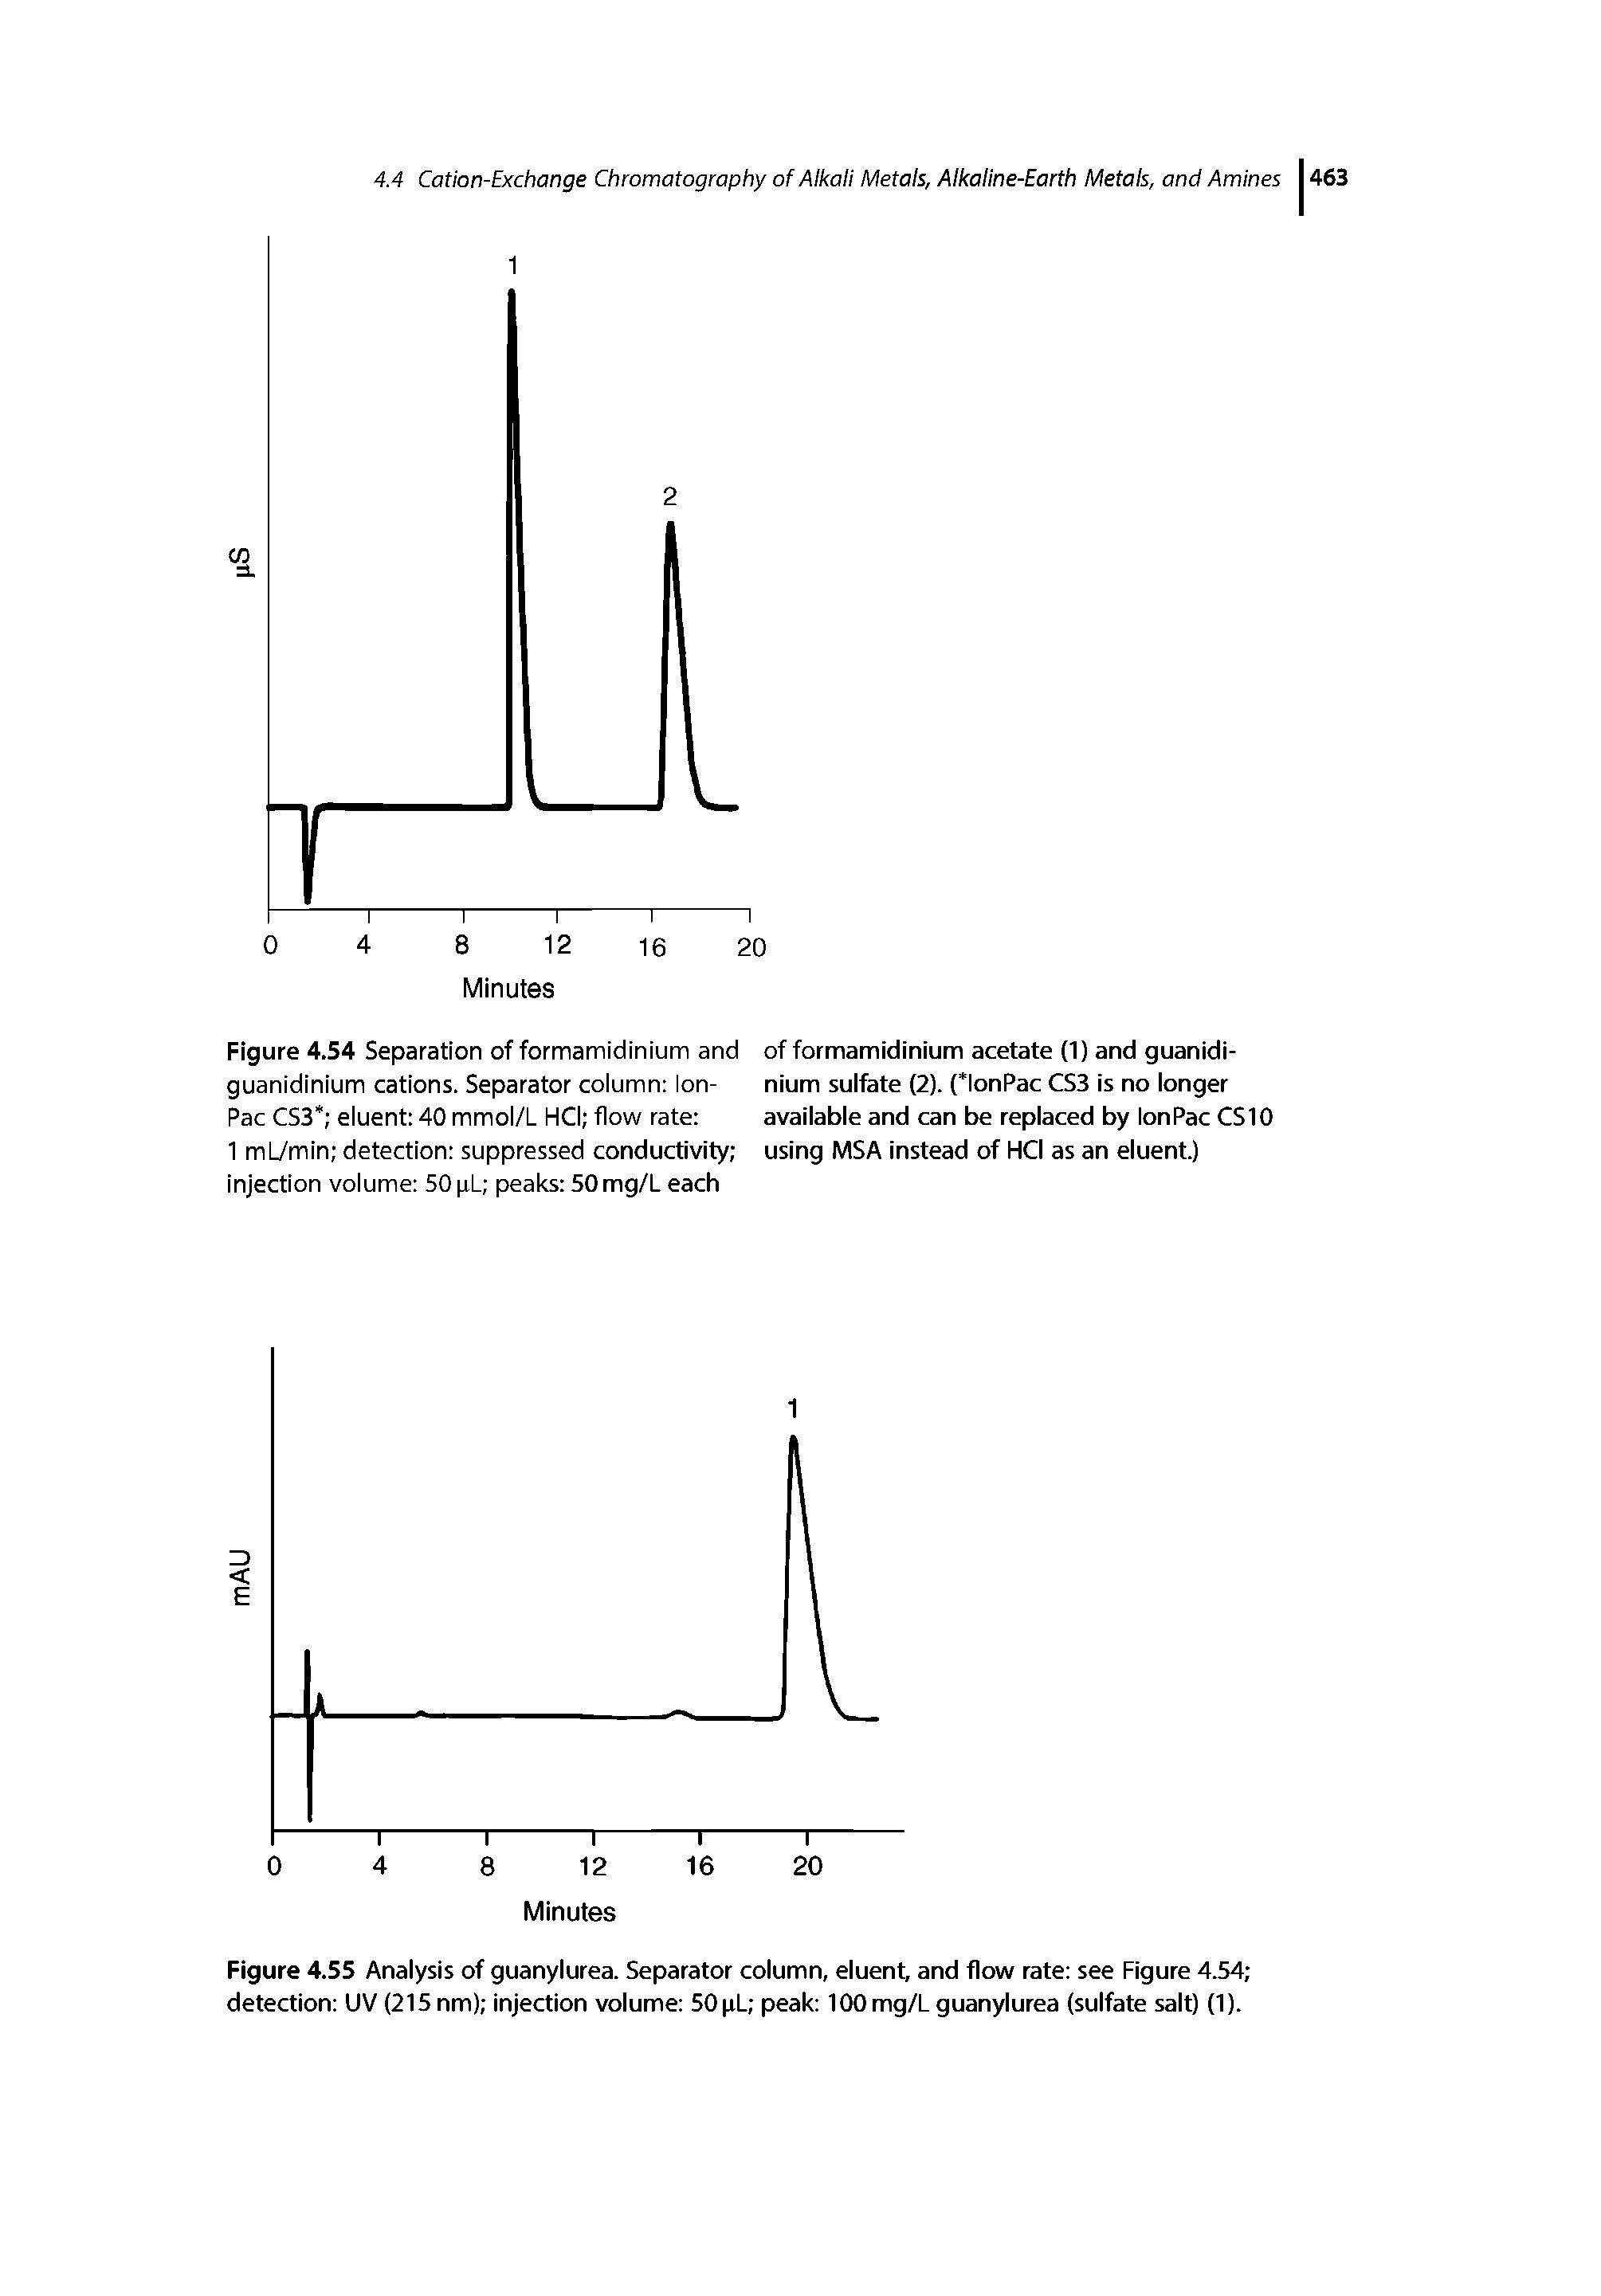 Figure 4.55 Analysis of guanylurea. Separator column, eluent and flow rate see Figure 4.54 detection UV (215nm) injection volume 50pL peak 100mg/Lguanylurea (sulfate salt) (1).